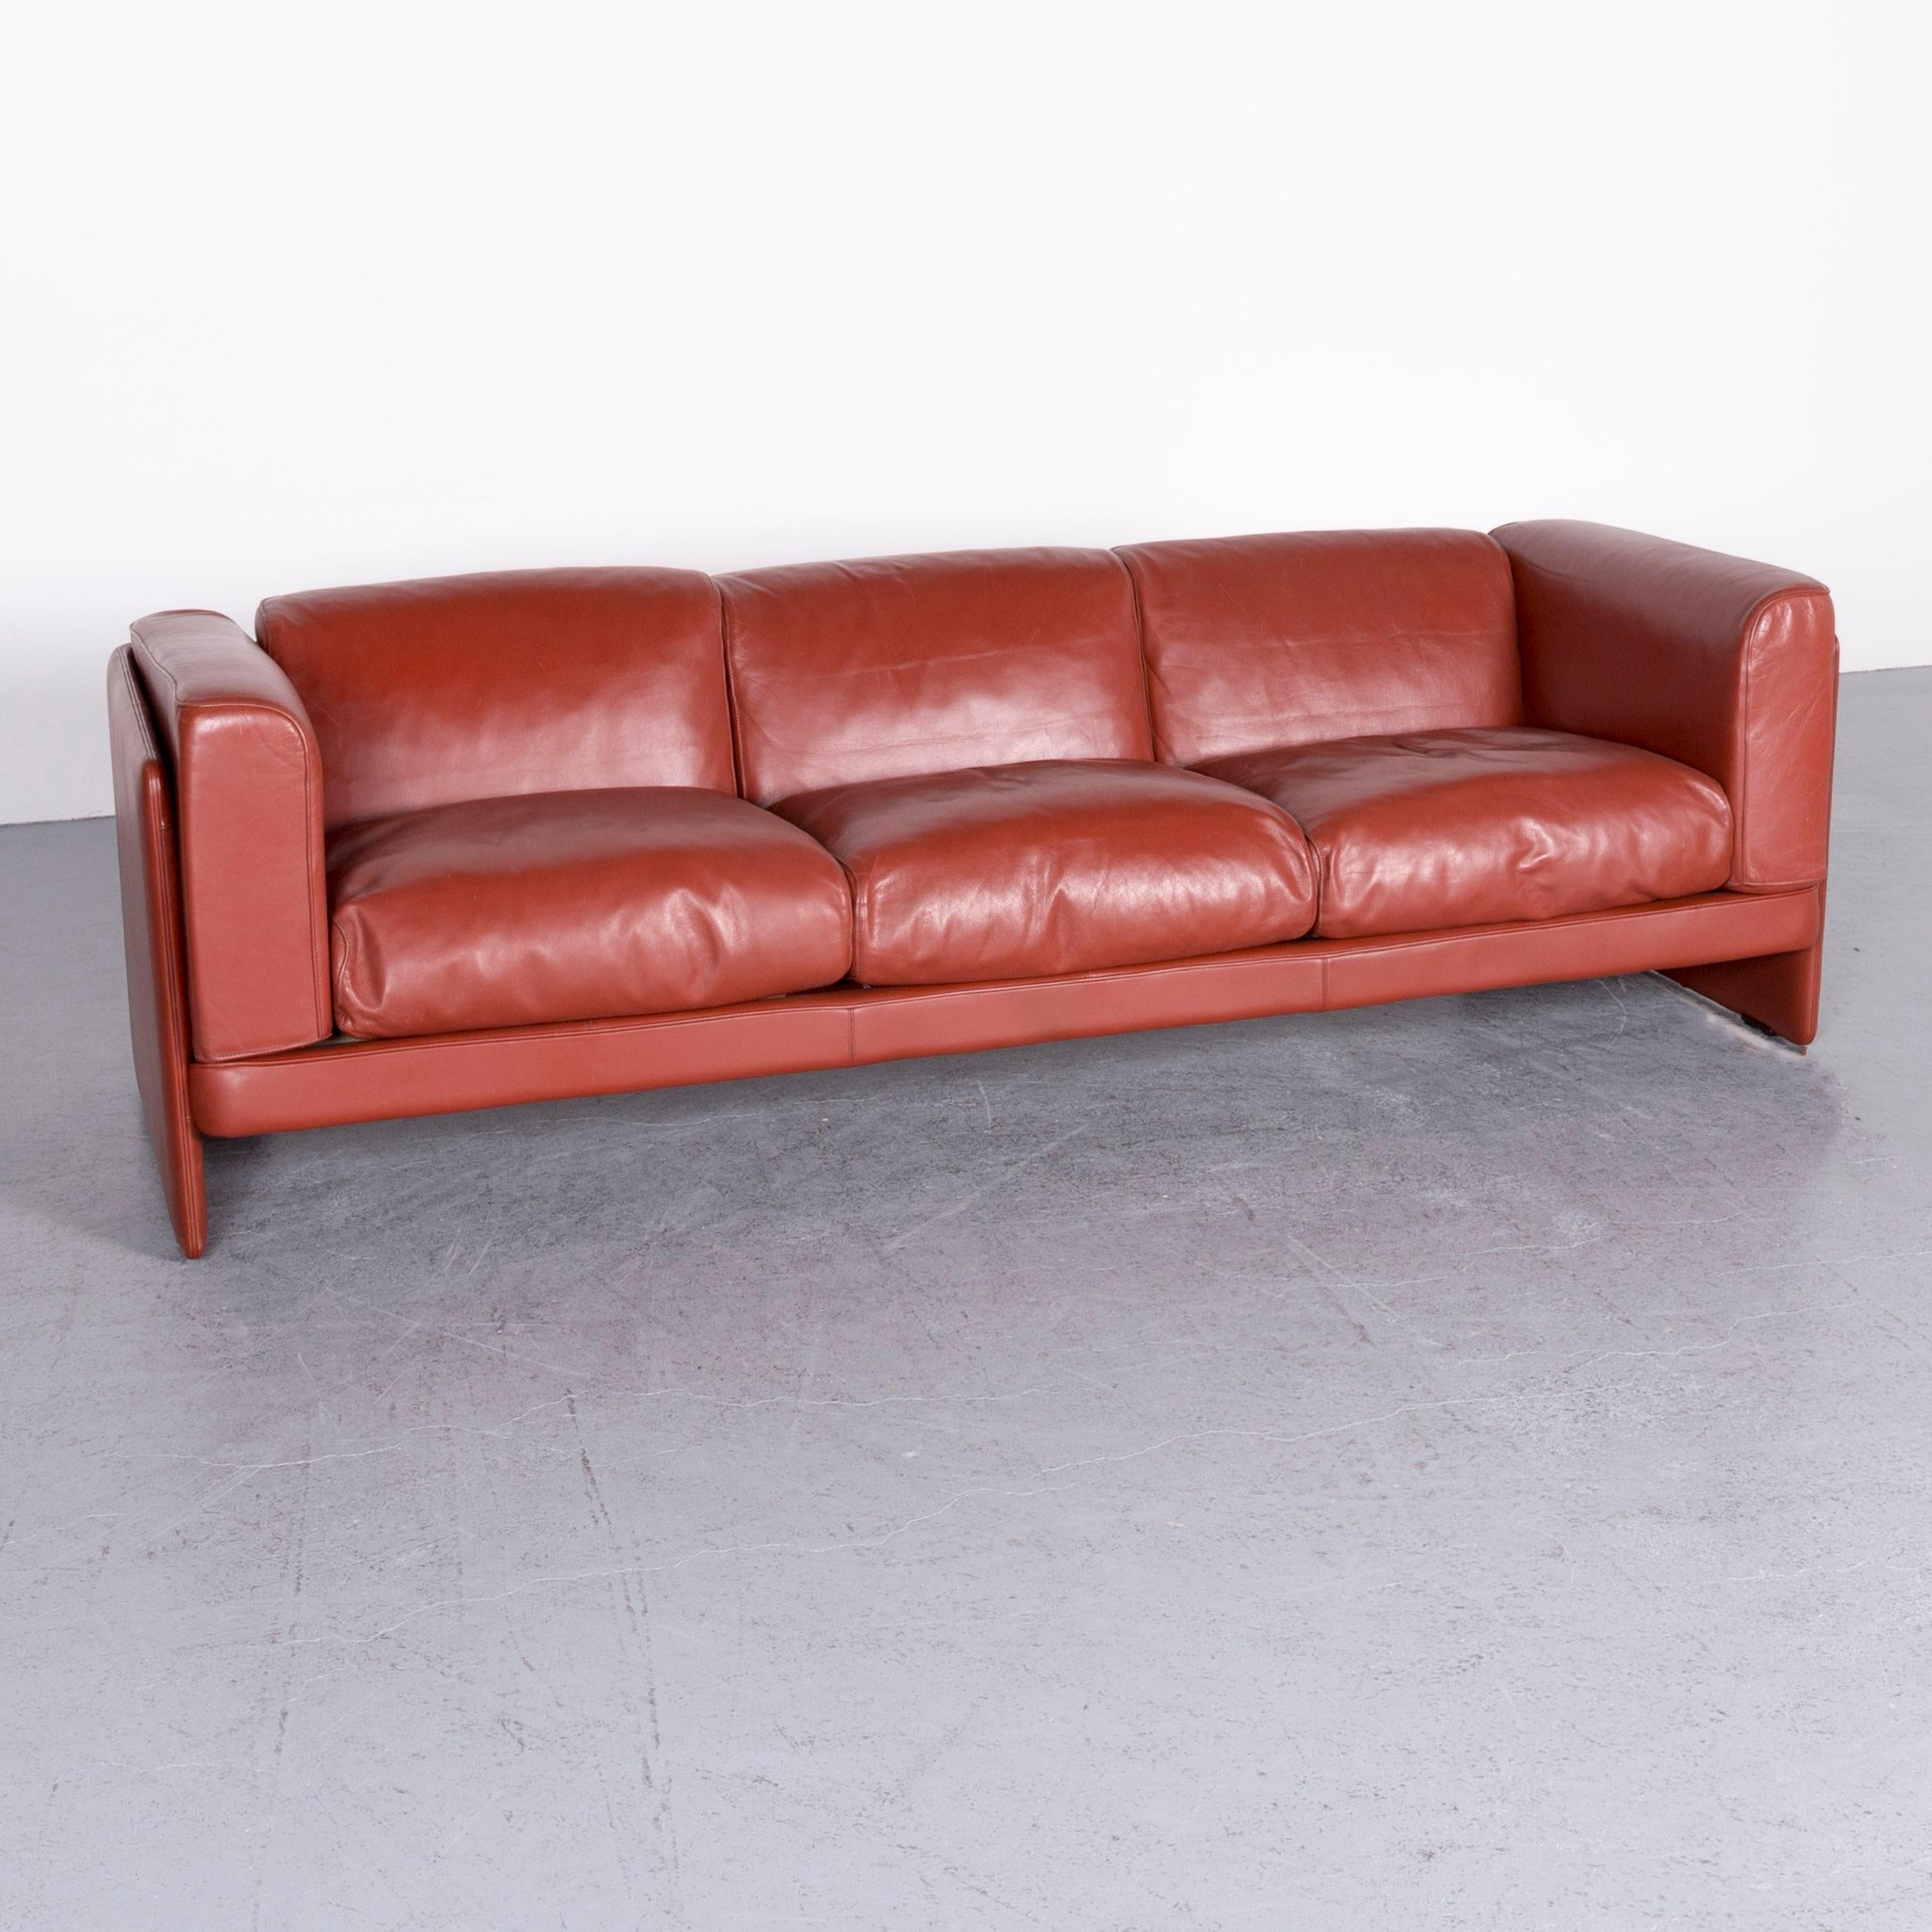 We bring to you a Poltrona Frau Le Chapanelle designer leather sofa orange by Tito Agnoli.